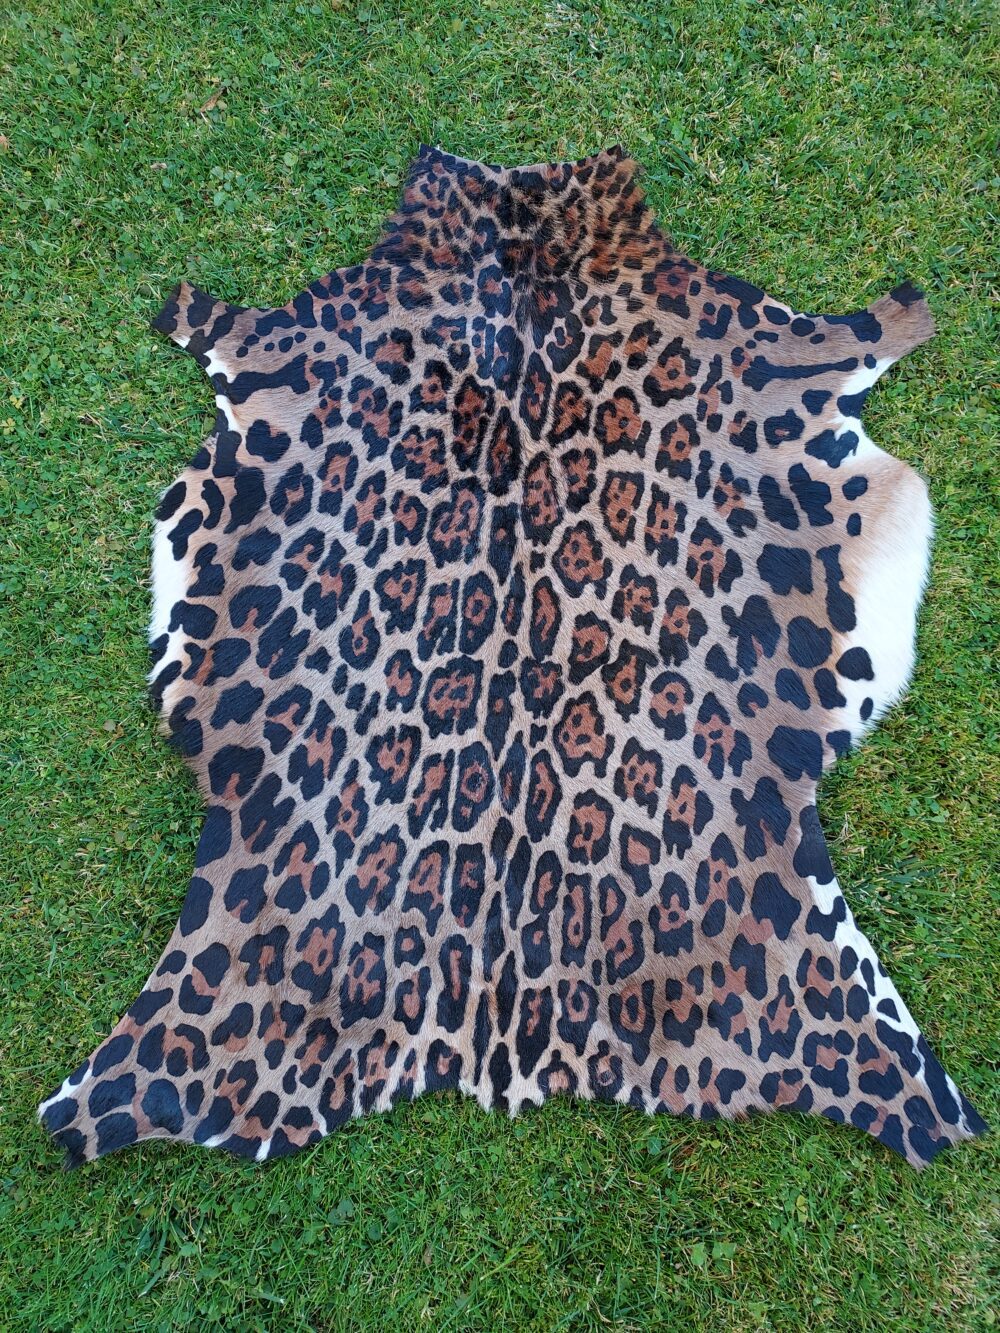 Leopard Leather Animal Carpet Natural Goatskin Leather Leopard Pattern Decorative skins Producent owczych skór dekoracyjnych | Tannery Sheepskin | KalSkór 2